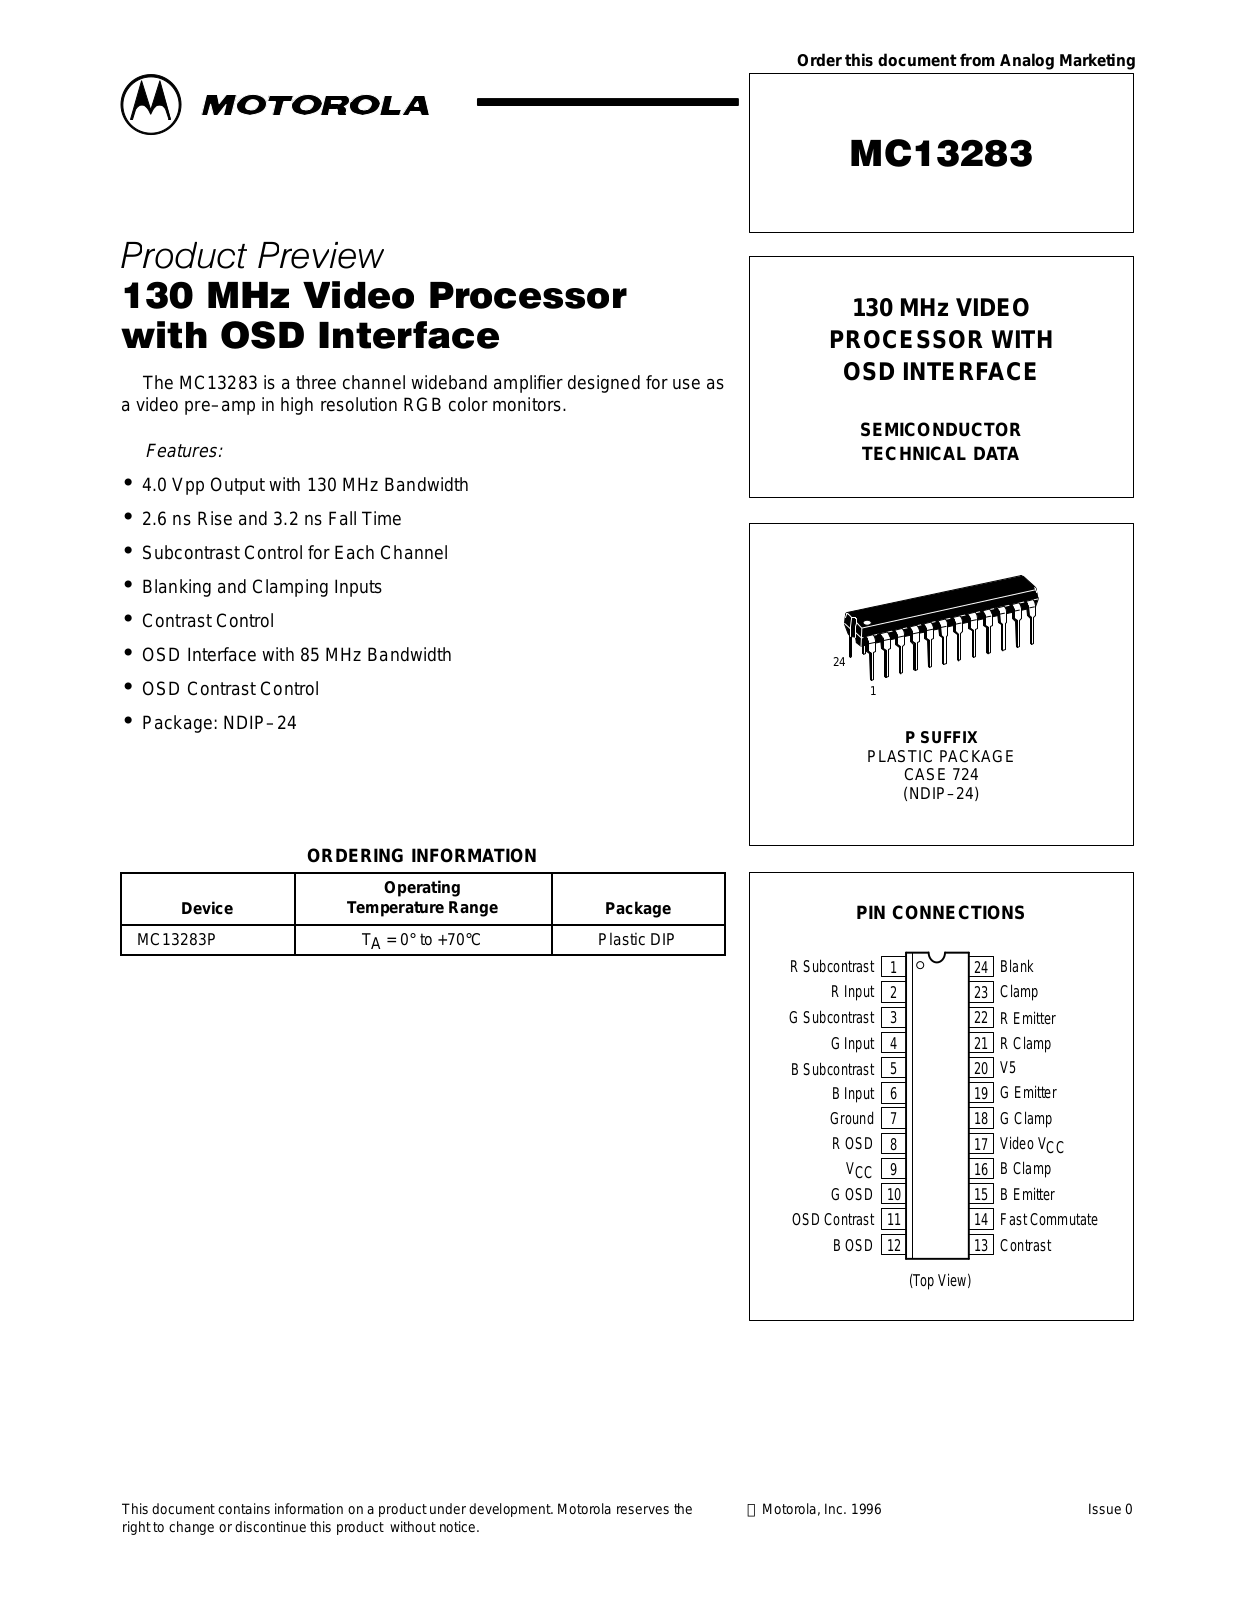 Motorola MC13283P Datasheet